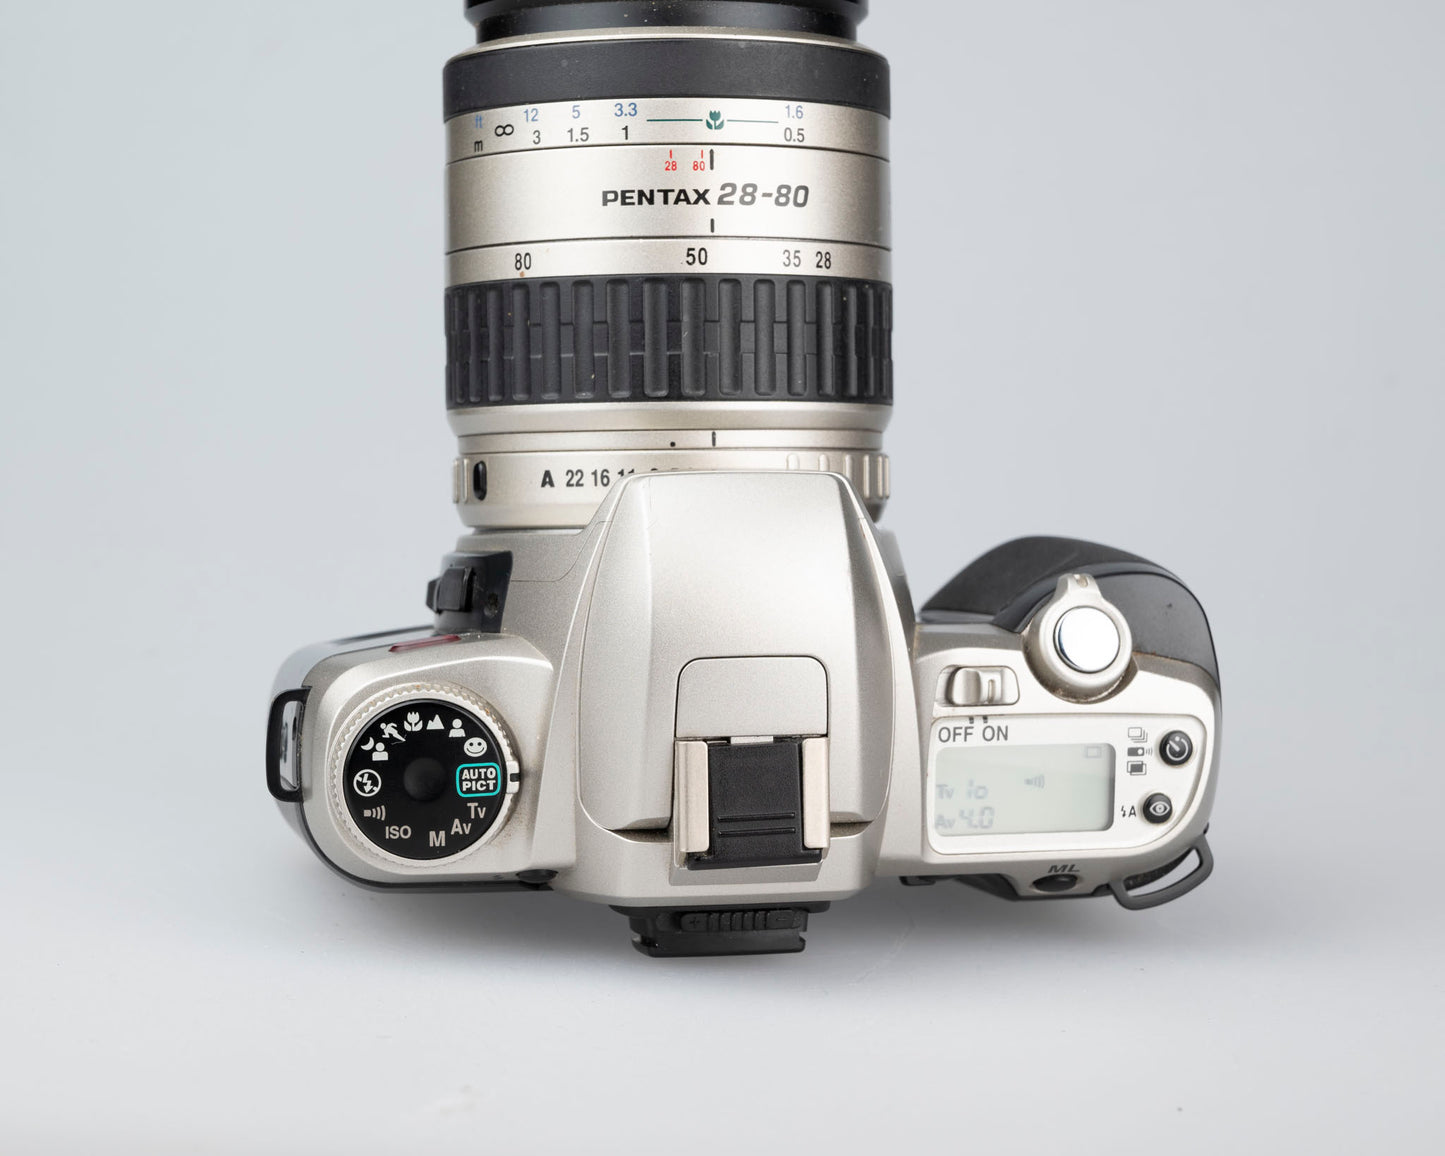 Pentax MZ-7 Reflex 35 mm avec objectif SMC Pentax-FA 28-80 mm